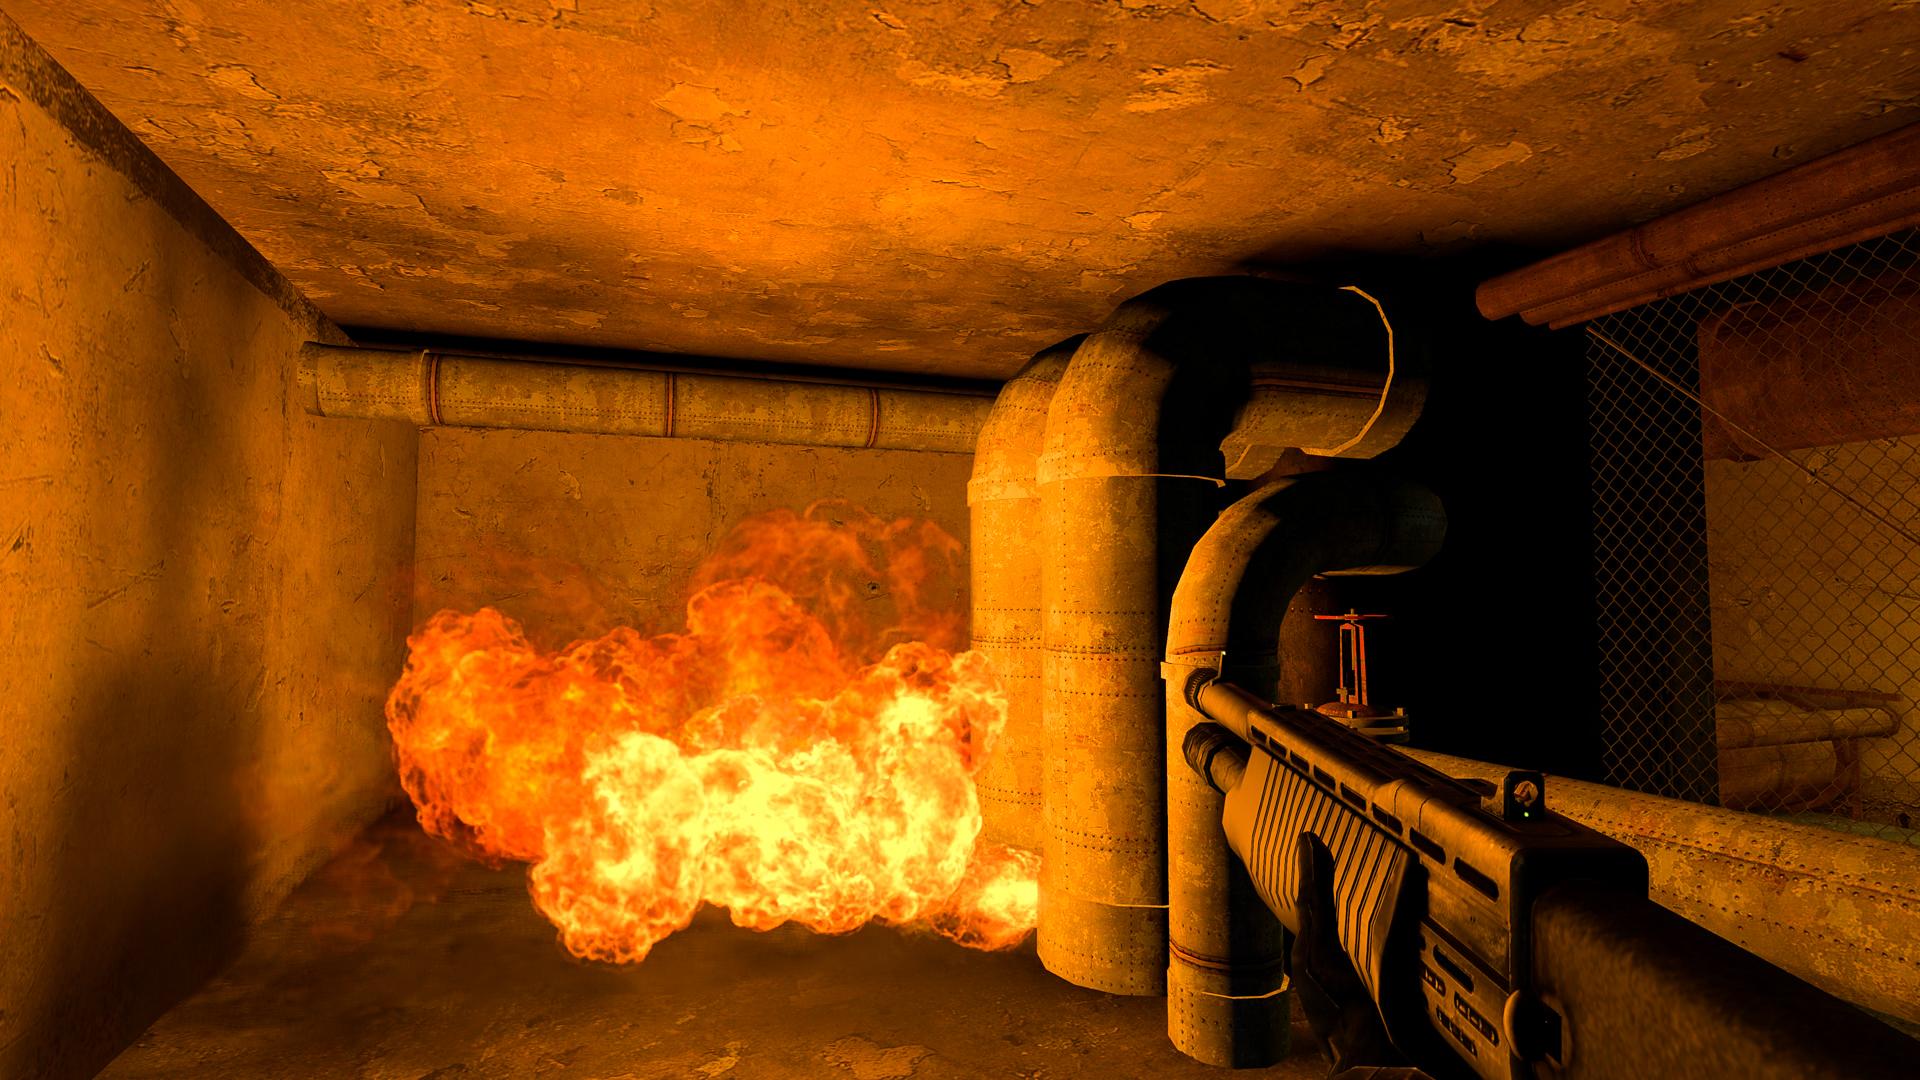 Screenshot №8 from game Half-Life 2: Update